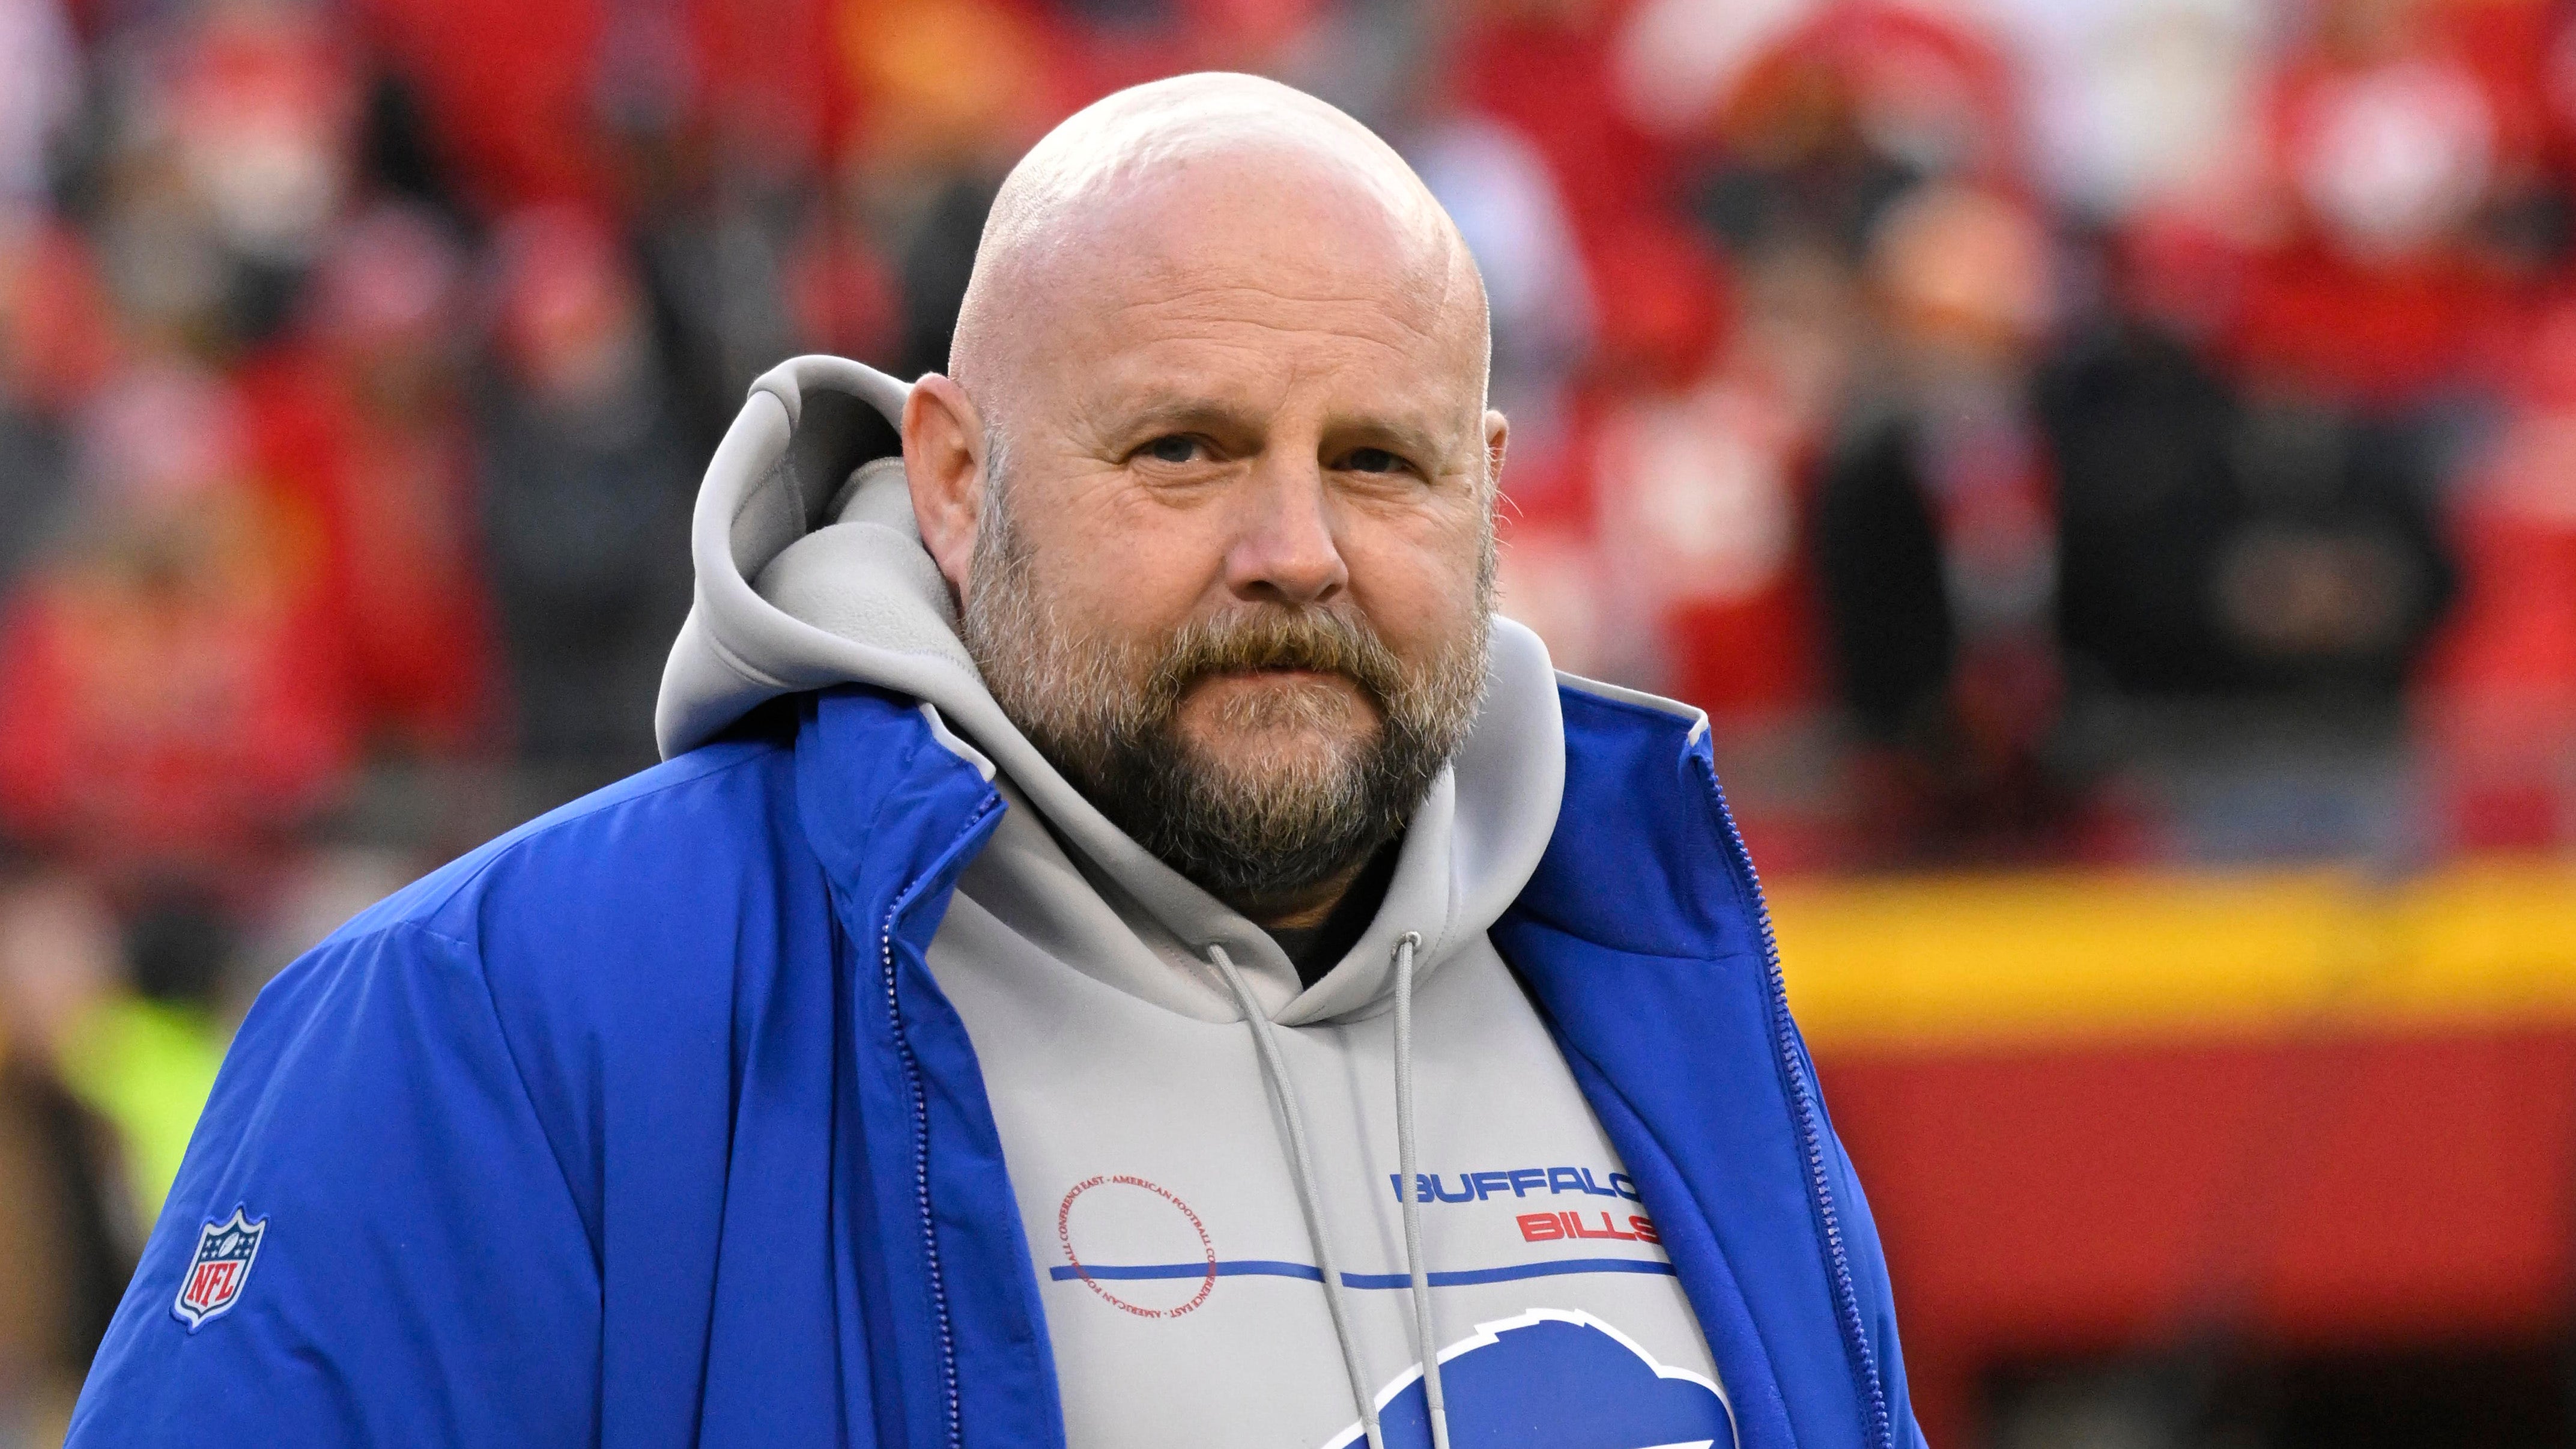 NY Giants hire Brian Daboll Bills offensive coordinator as head coach – Fox News